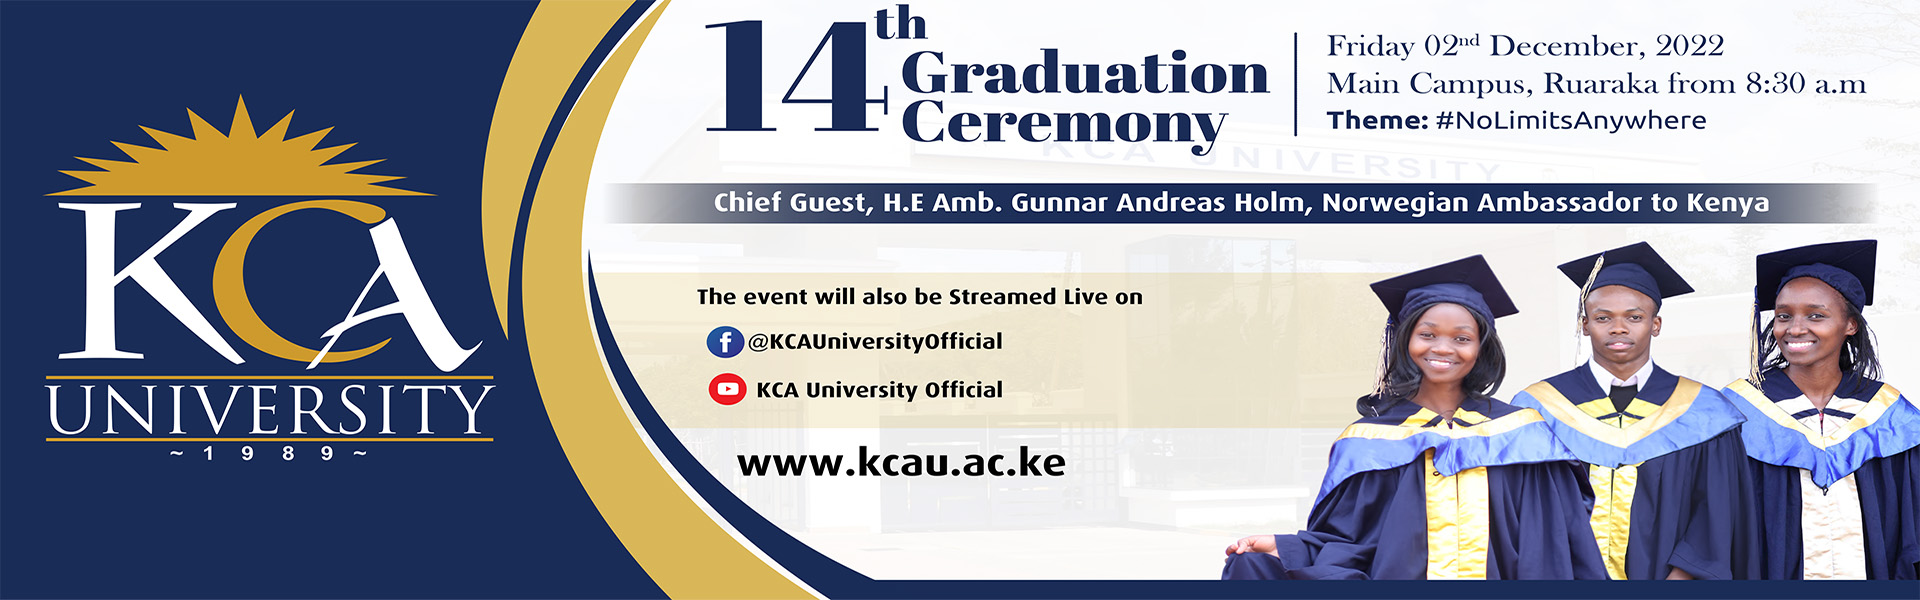 KCA-University-14th-Graduation-Banner.j